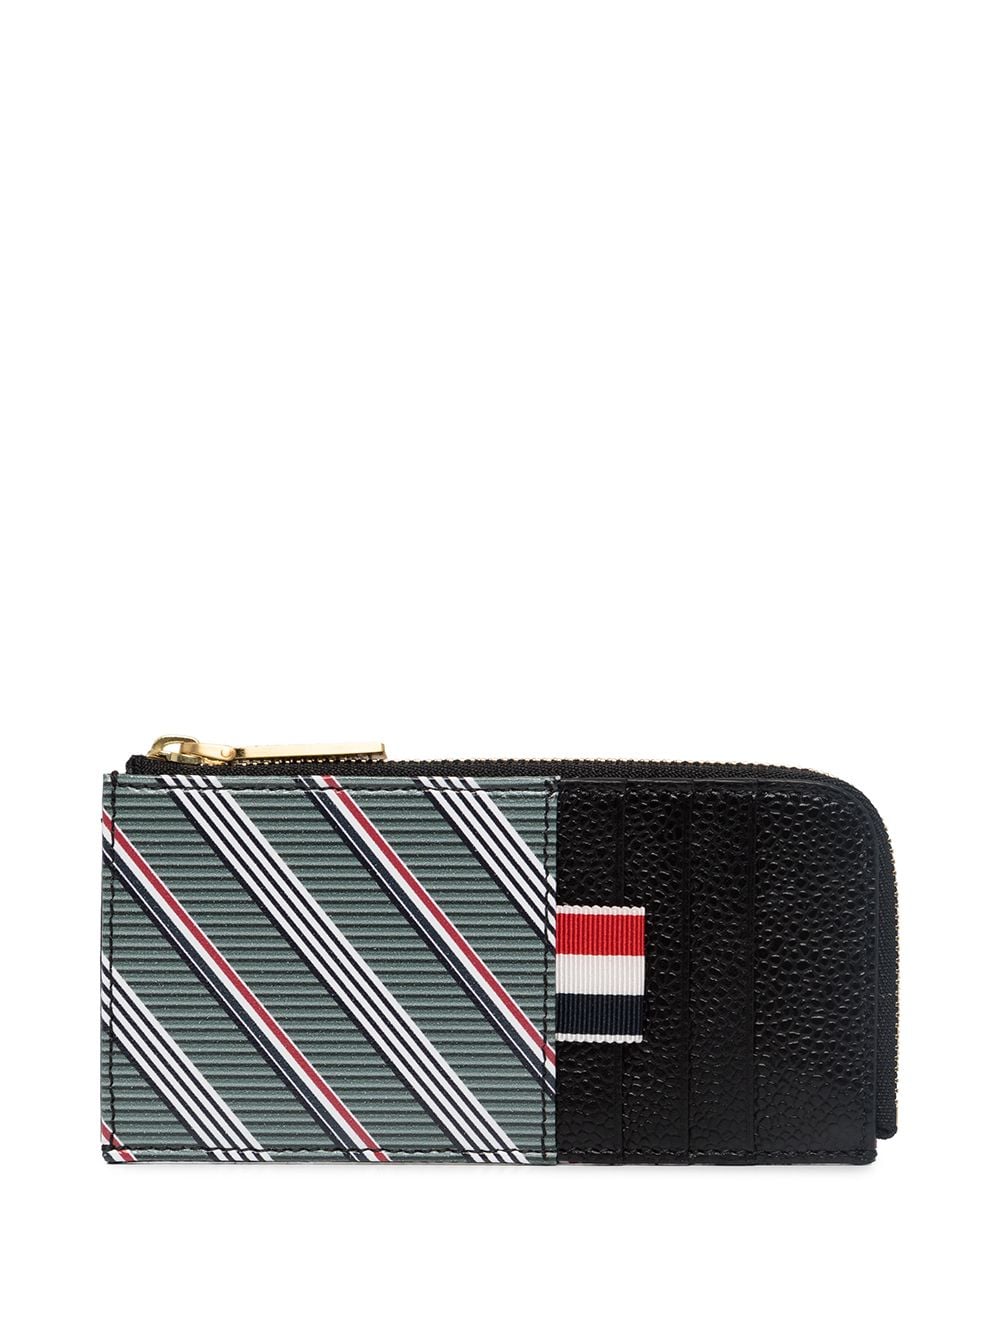 Thom Browne striped zip wallet - Grey von Thom Browne